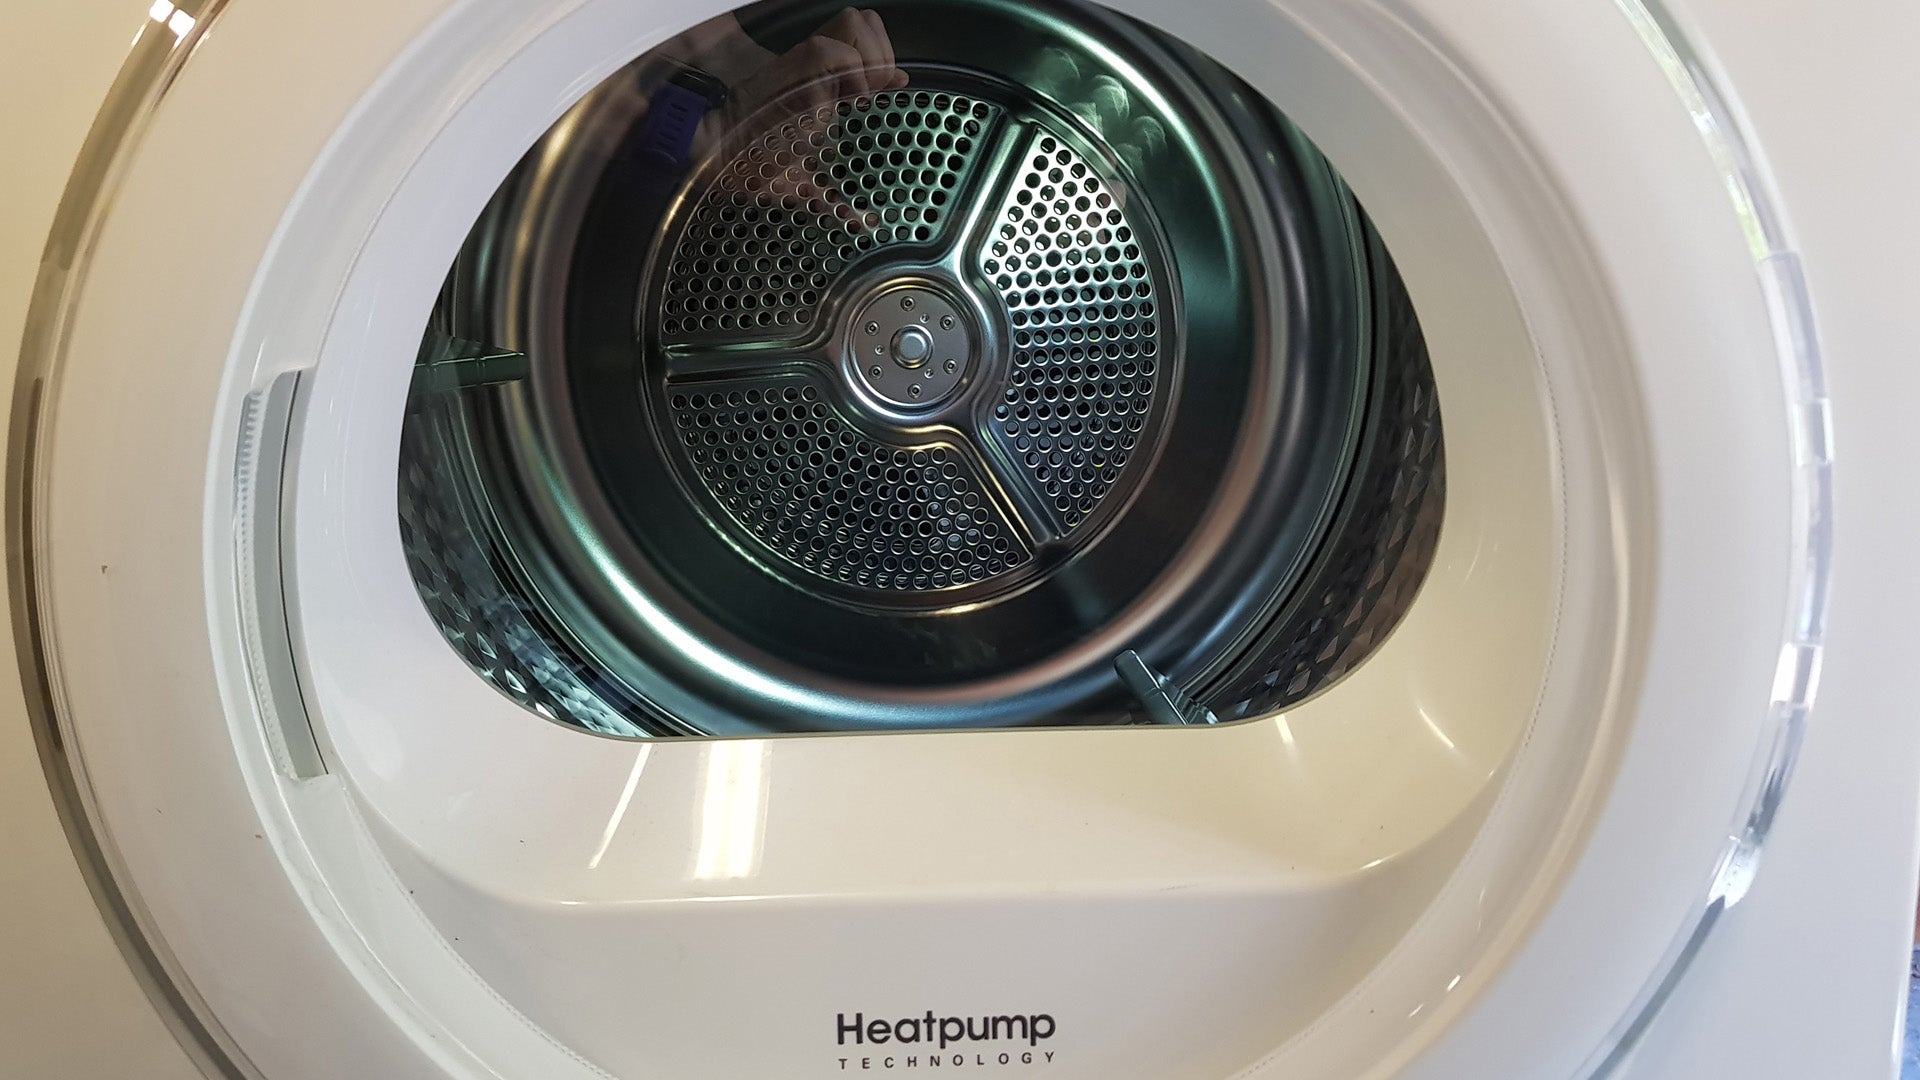 Samsung DV90M5000IW tumble dryer with Heatpump Technology.